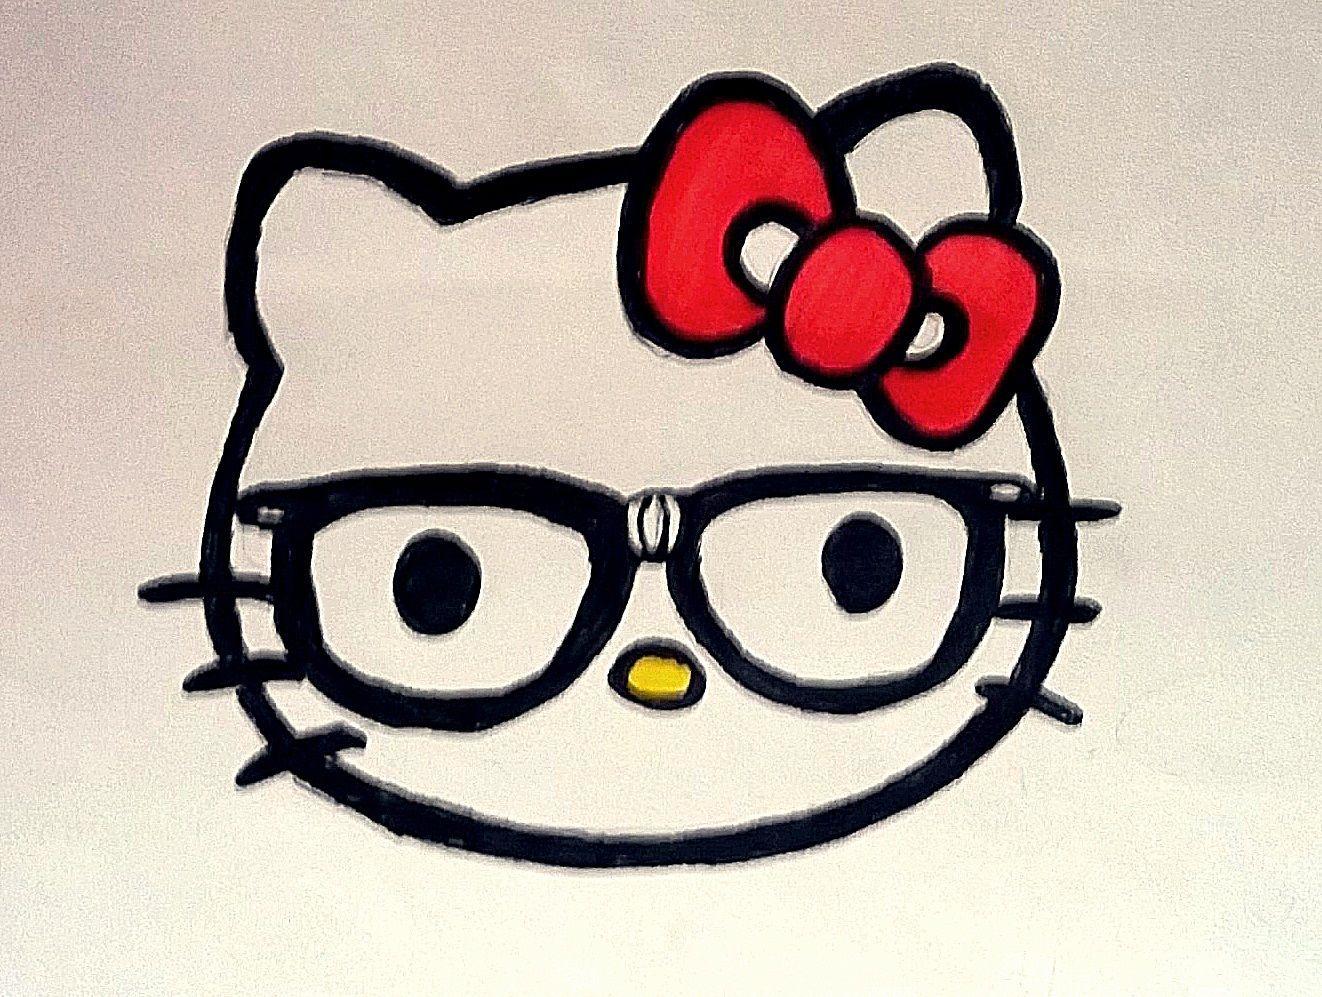 hello kitty nerd glasses wallpaper